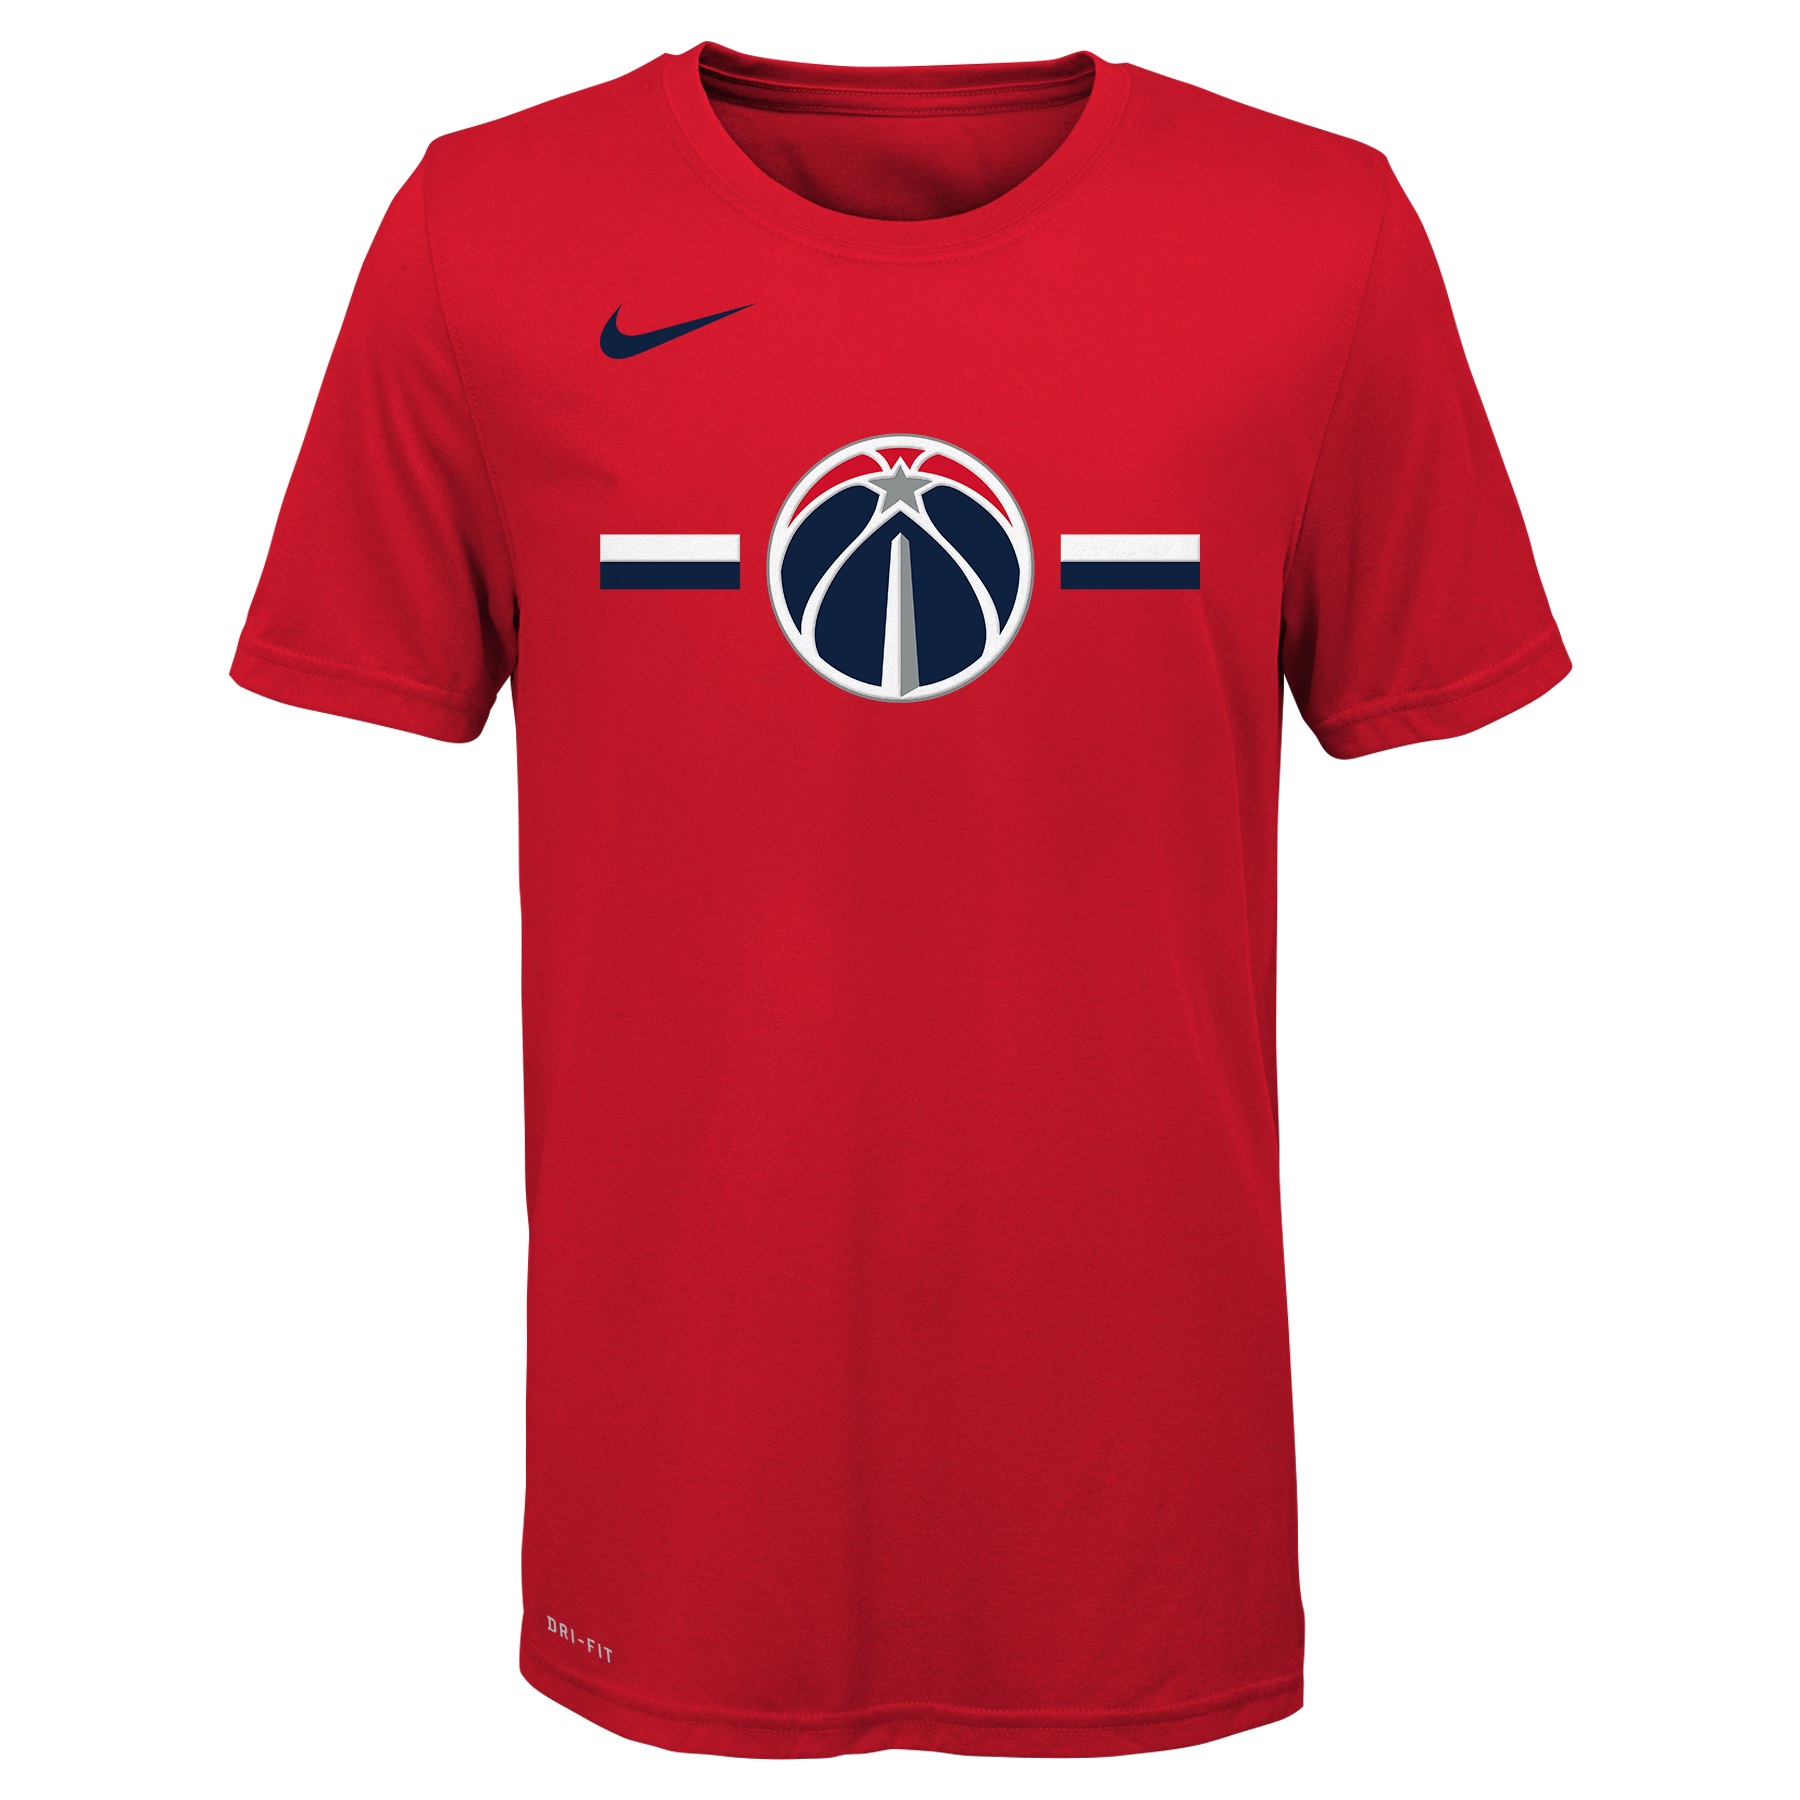 Nike NBA Youth Washington Wizards Dry Fit Essential Logo Tee Shirt | eBay